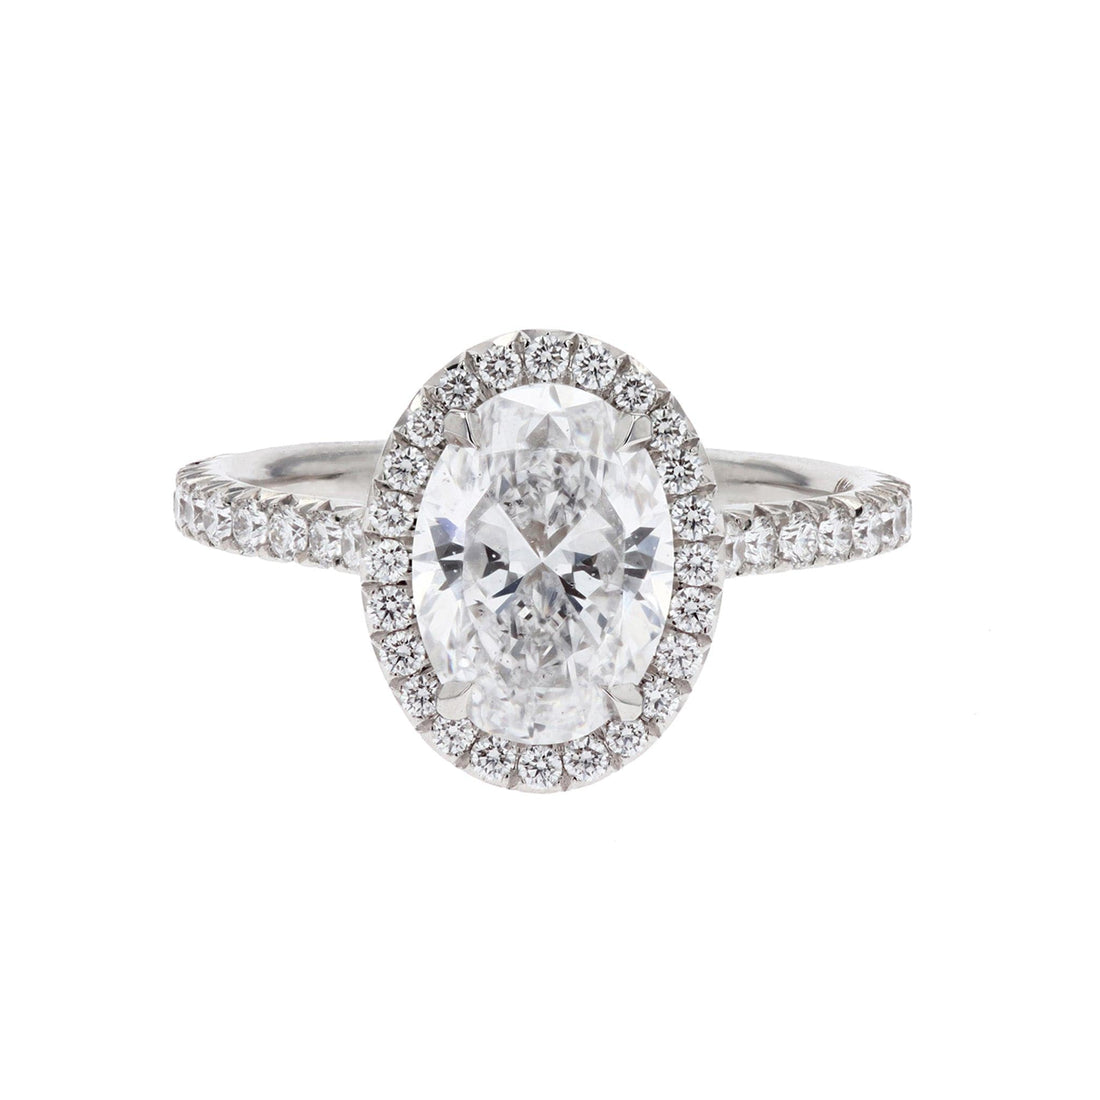 2 Carat Oval Diamond Halo Engagement Ring by Rahaminov